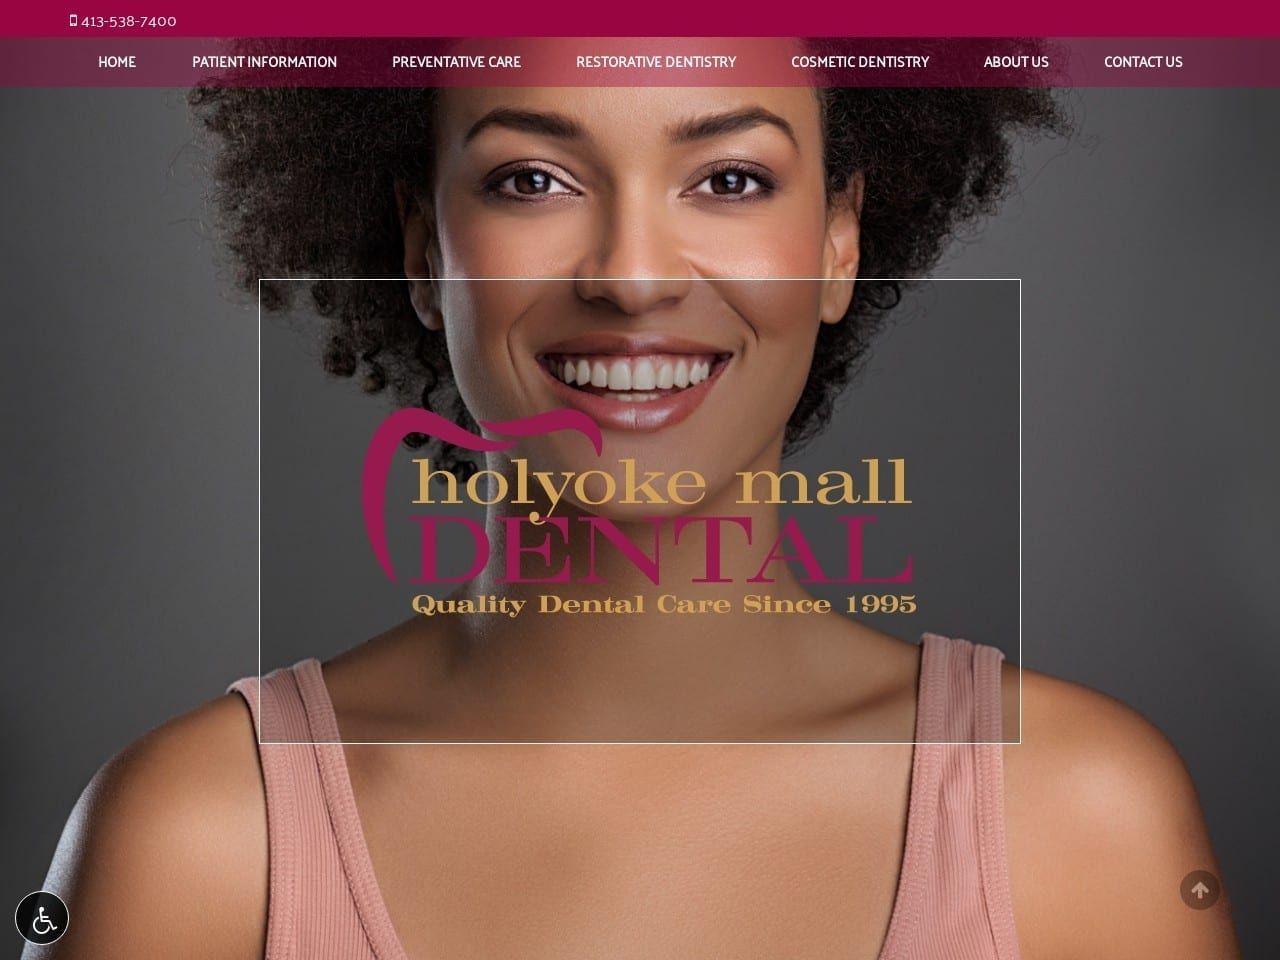 Holyoke Mall Dental Health Ctr Website Screenshot from holyokemalldental.com